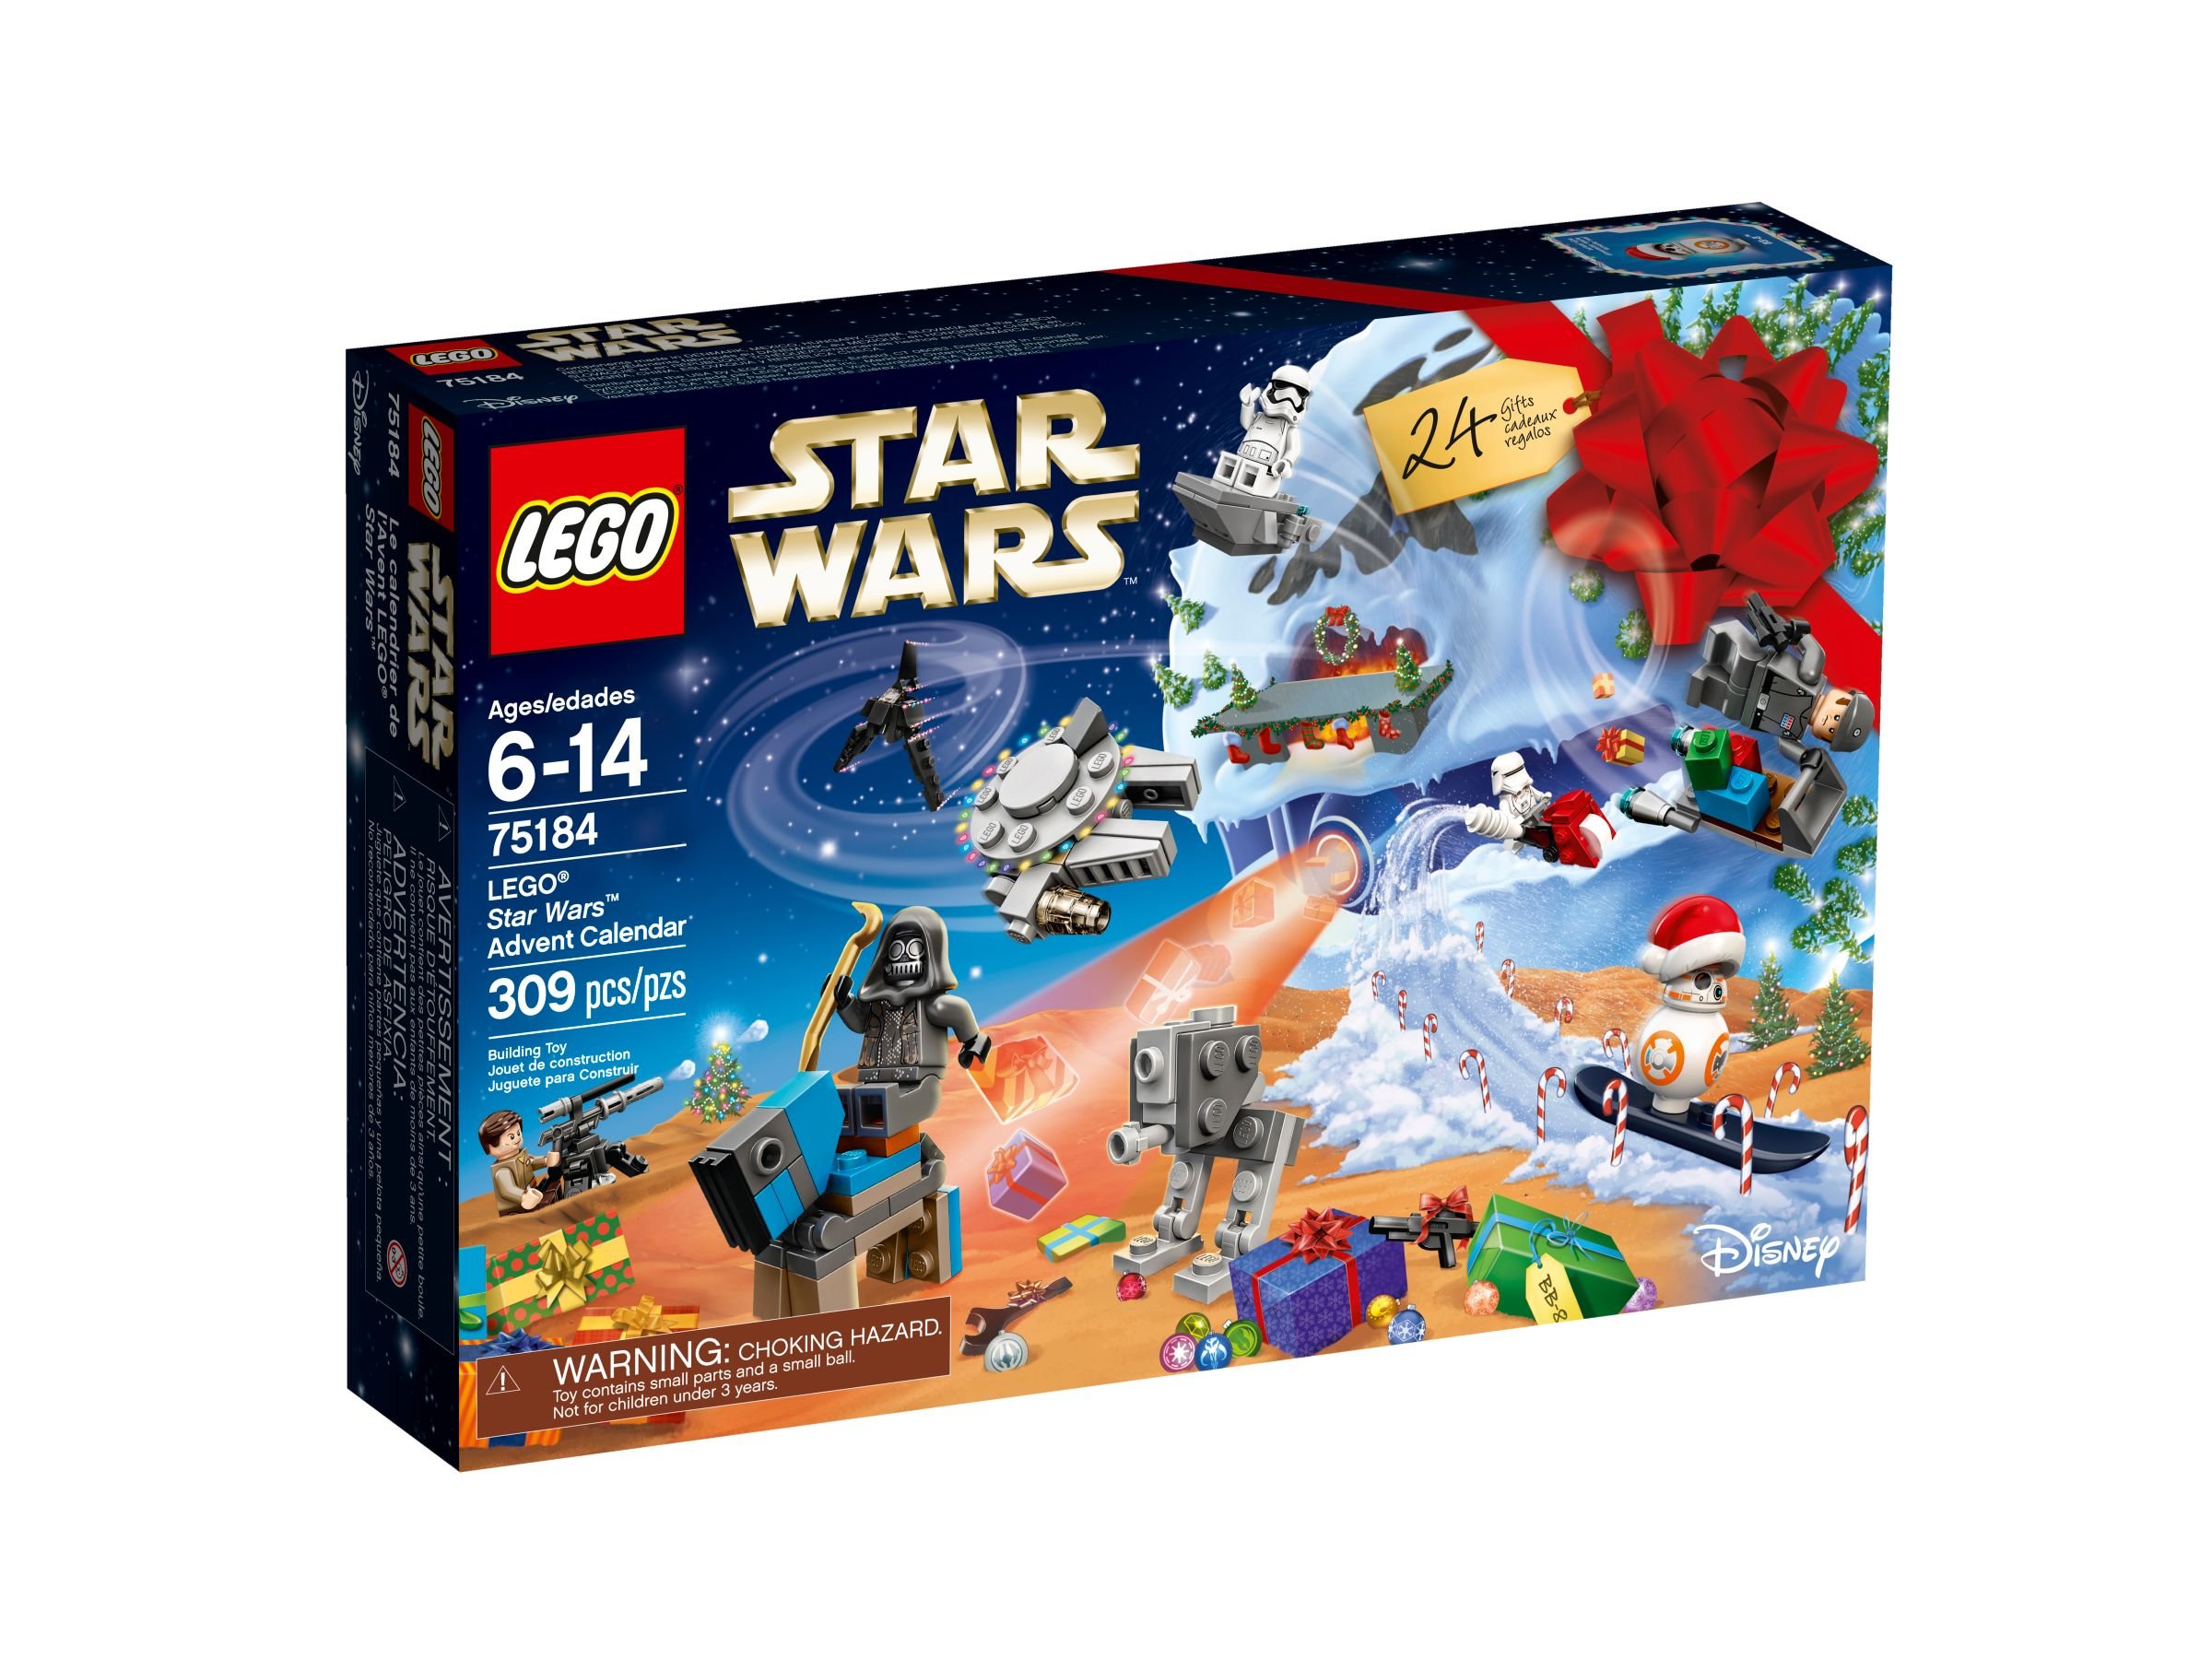 LEGO Star Wars 75184 Star Wars Adventskalender 2017 LEGO_75184_alt1.jpg